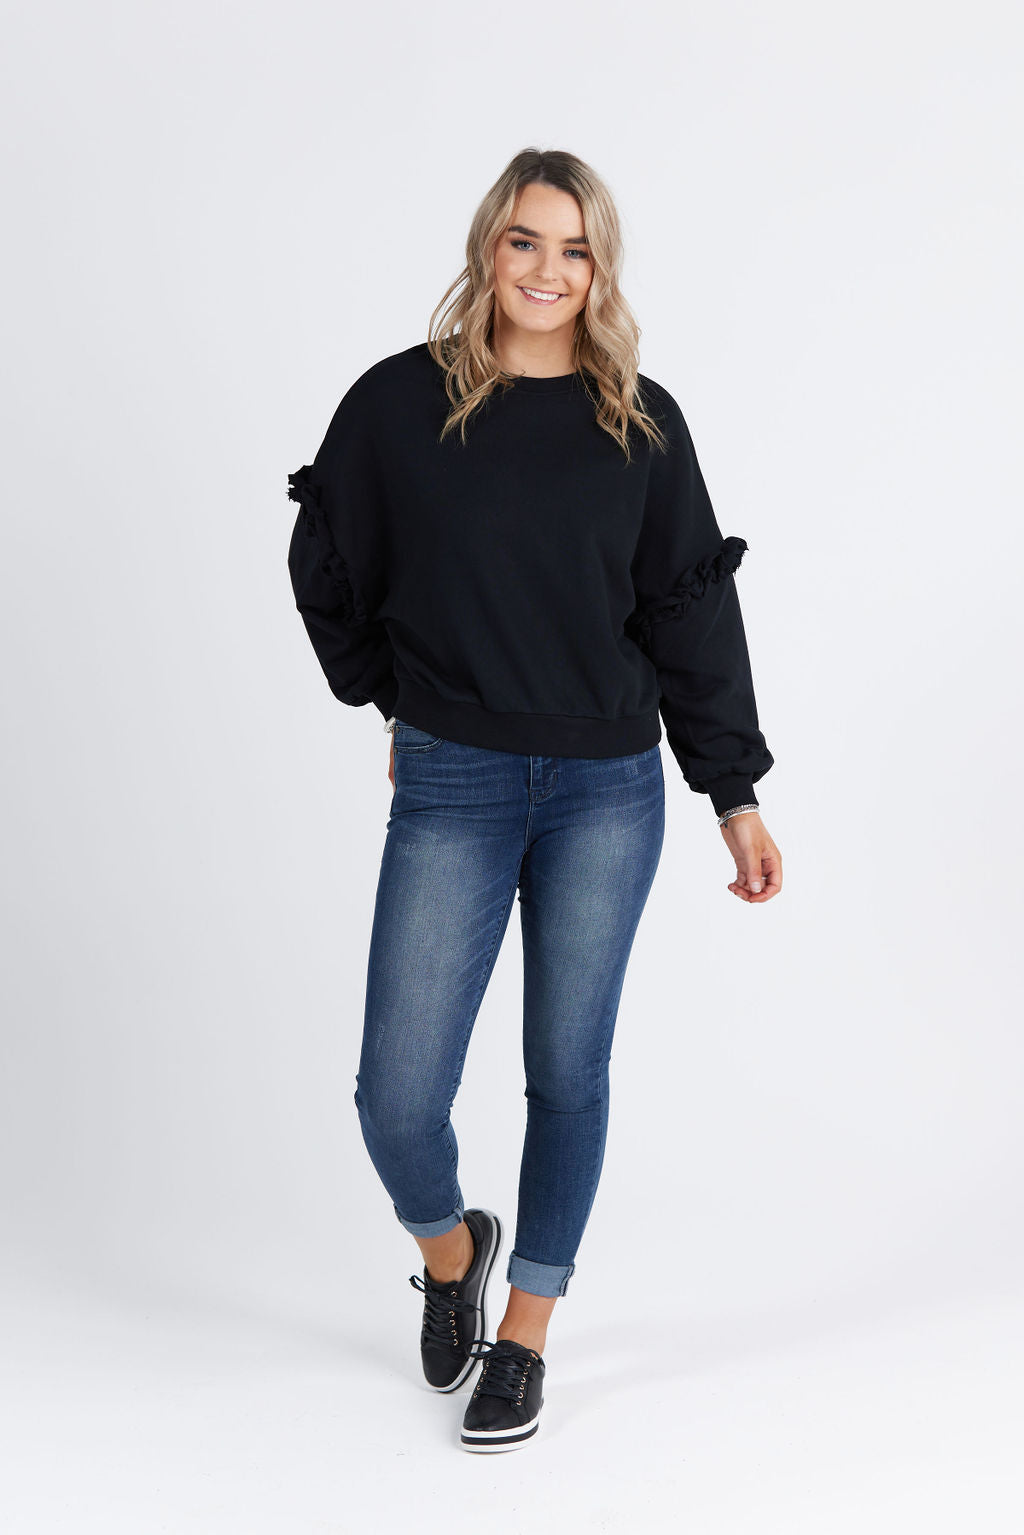 Eloise Ruffle Sweater Black